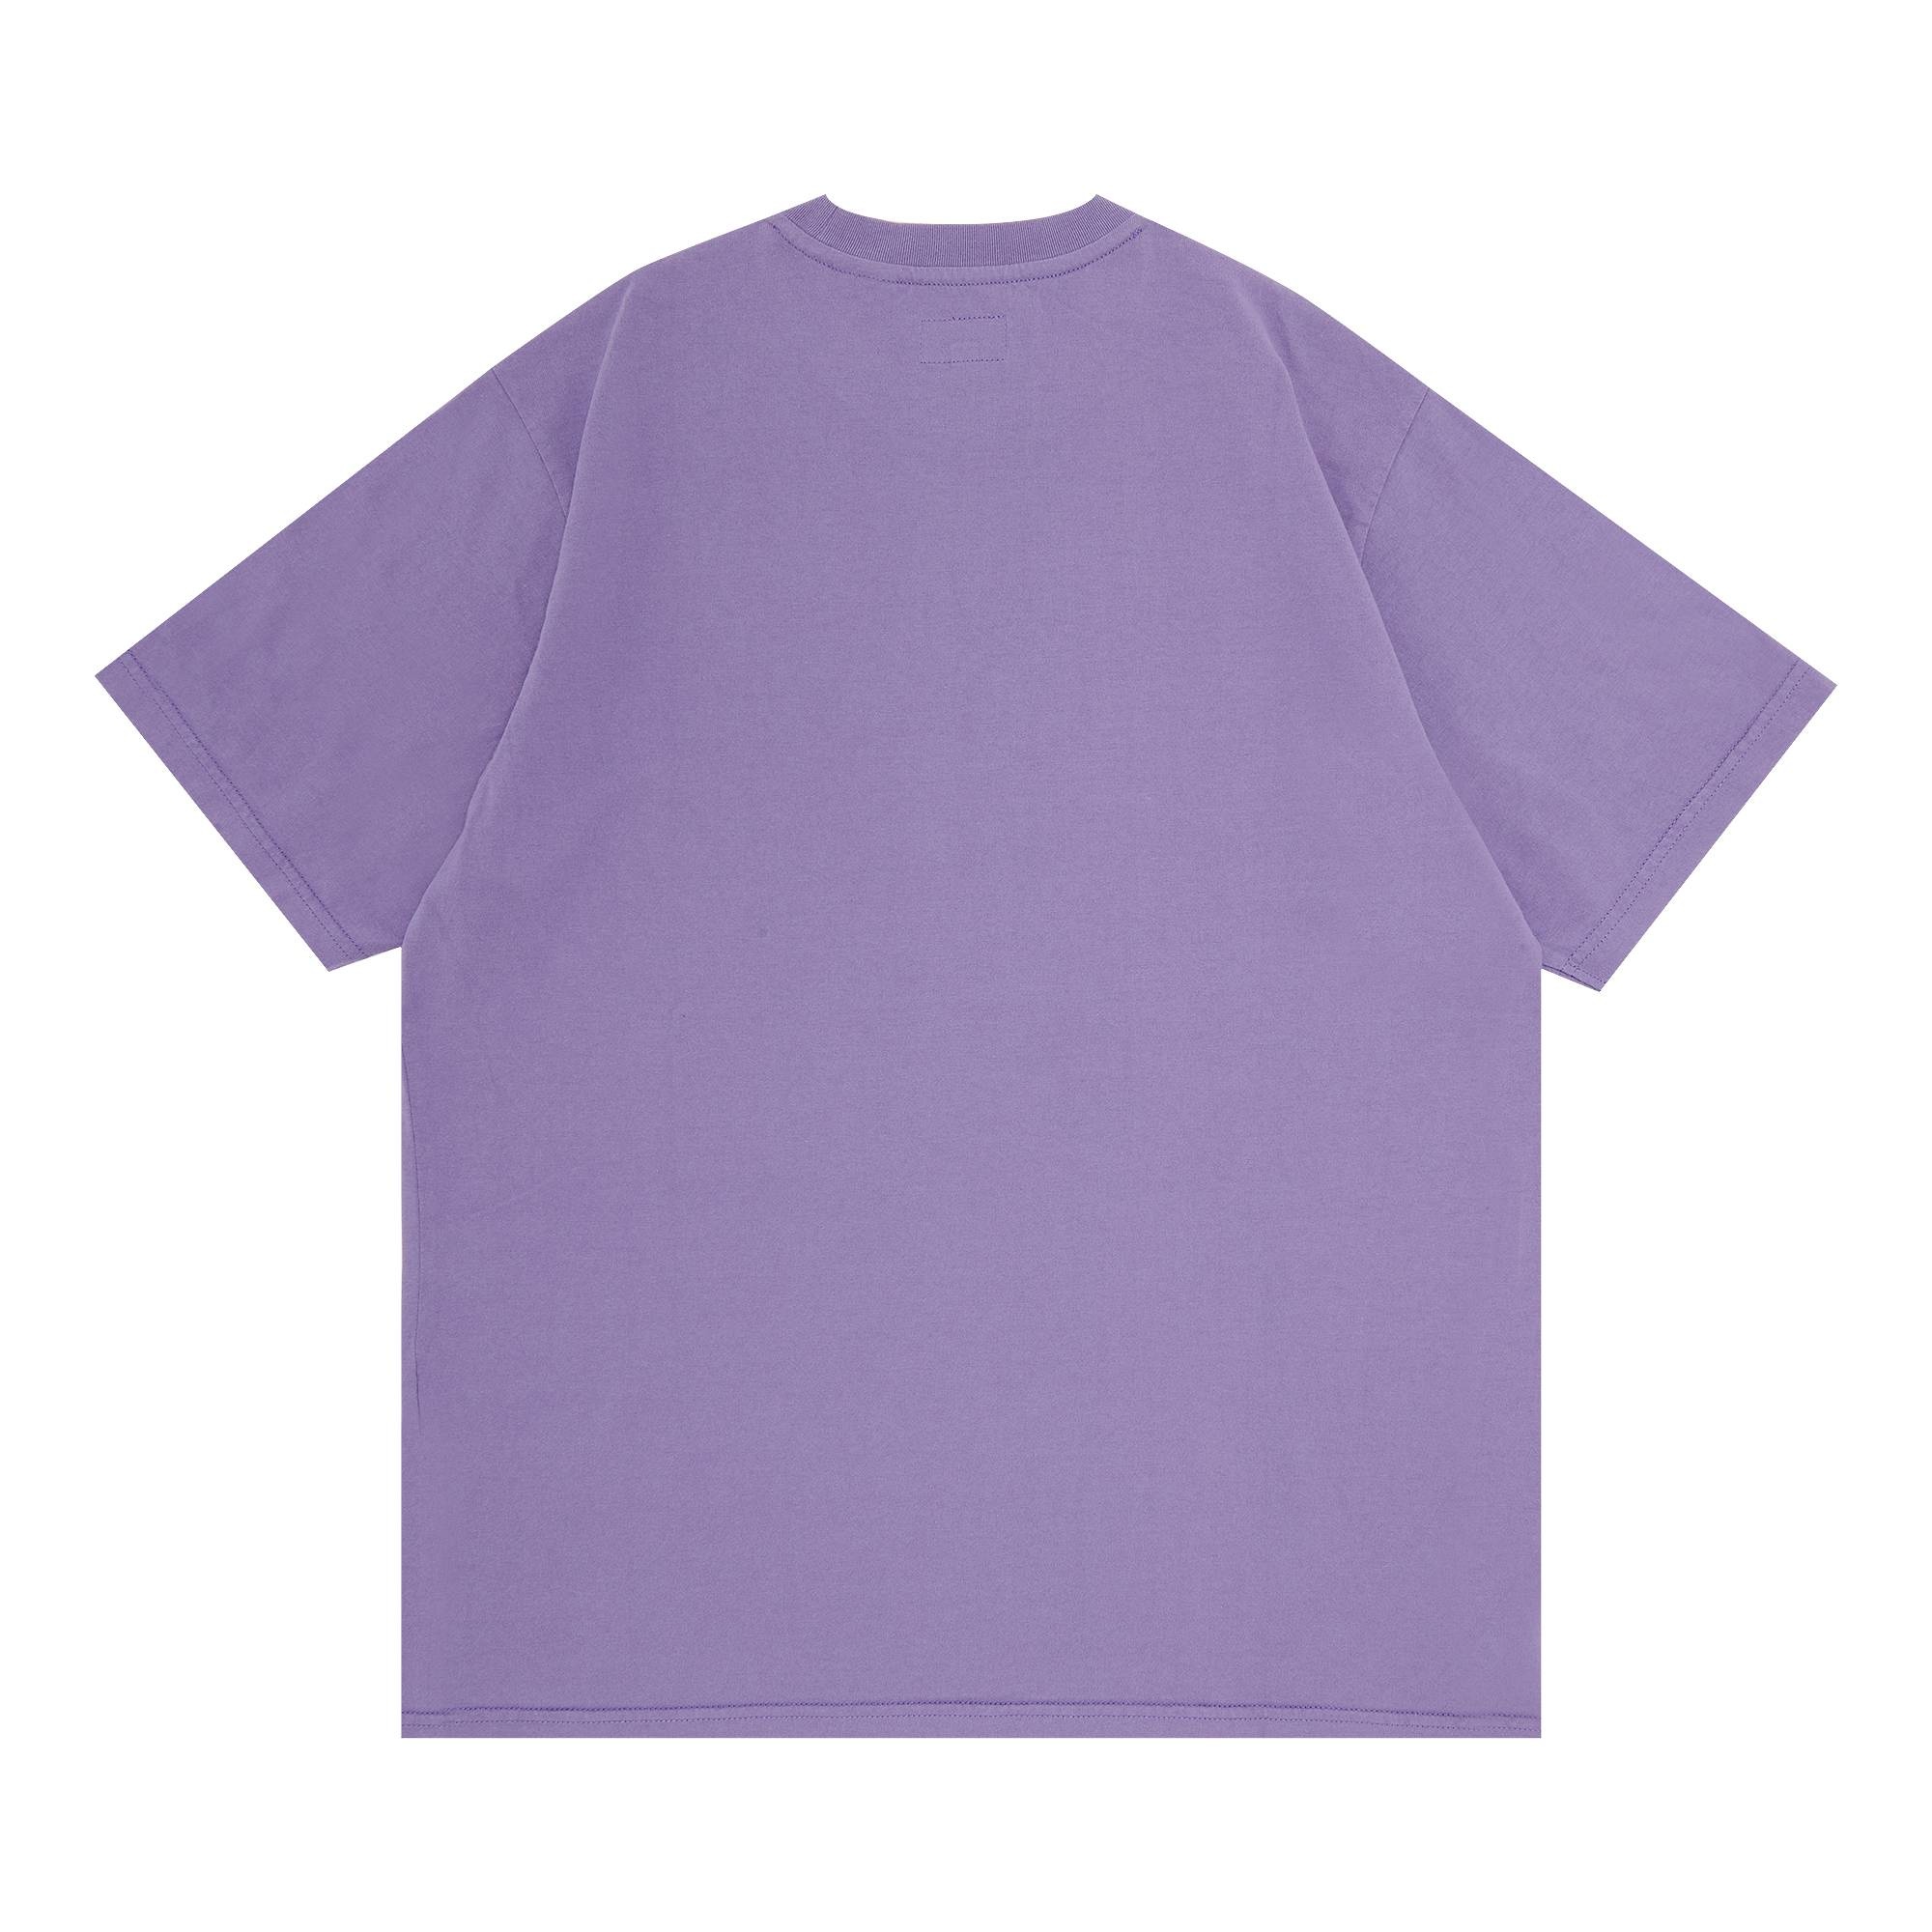 Supreme Phoenix Short-Sleeve Top 'Lilac' - 2